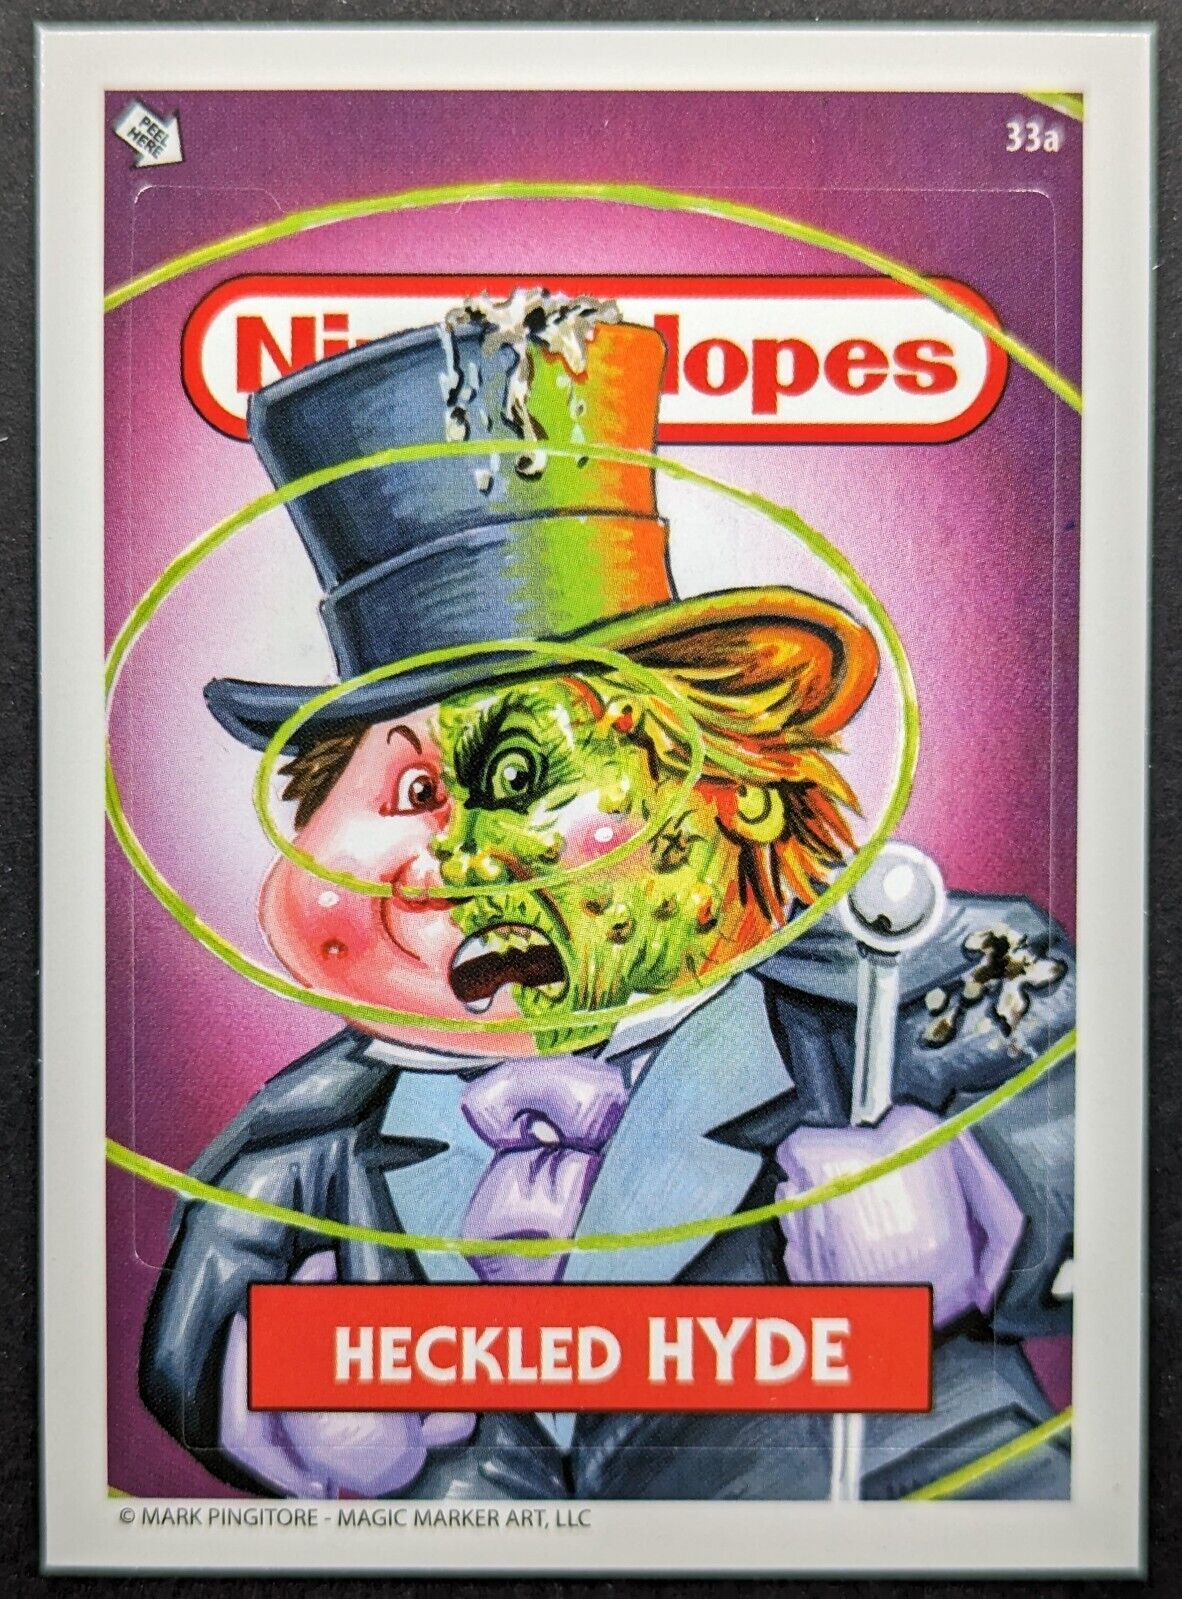 Heckled Hyde Jekyll 2023 Nintendopes Nintendo Parody Card #33a (NM)